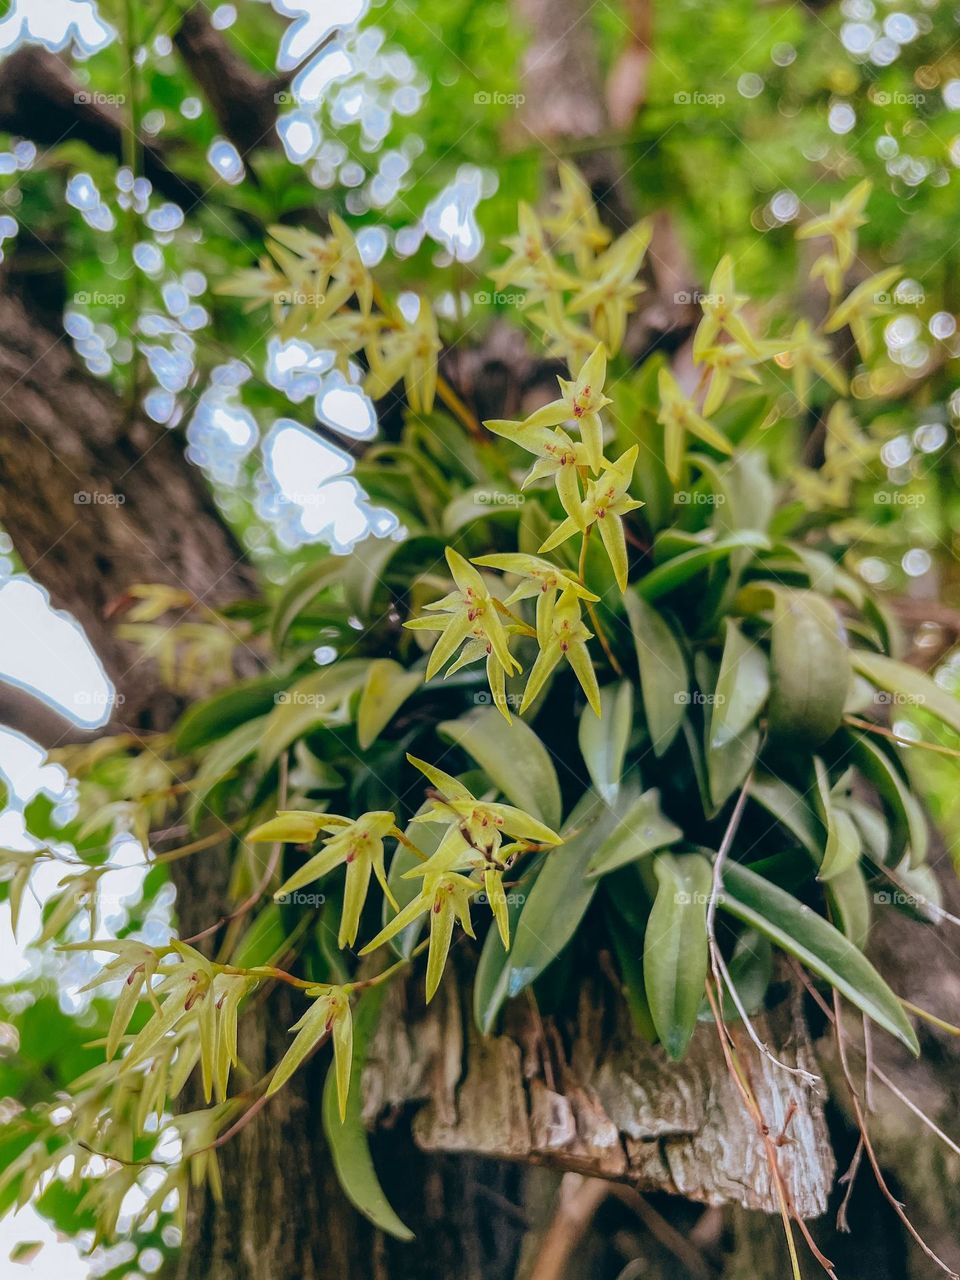 Mini-orchid close up